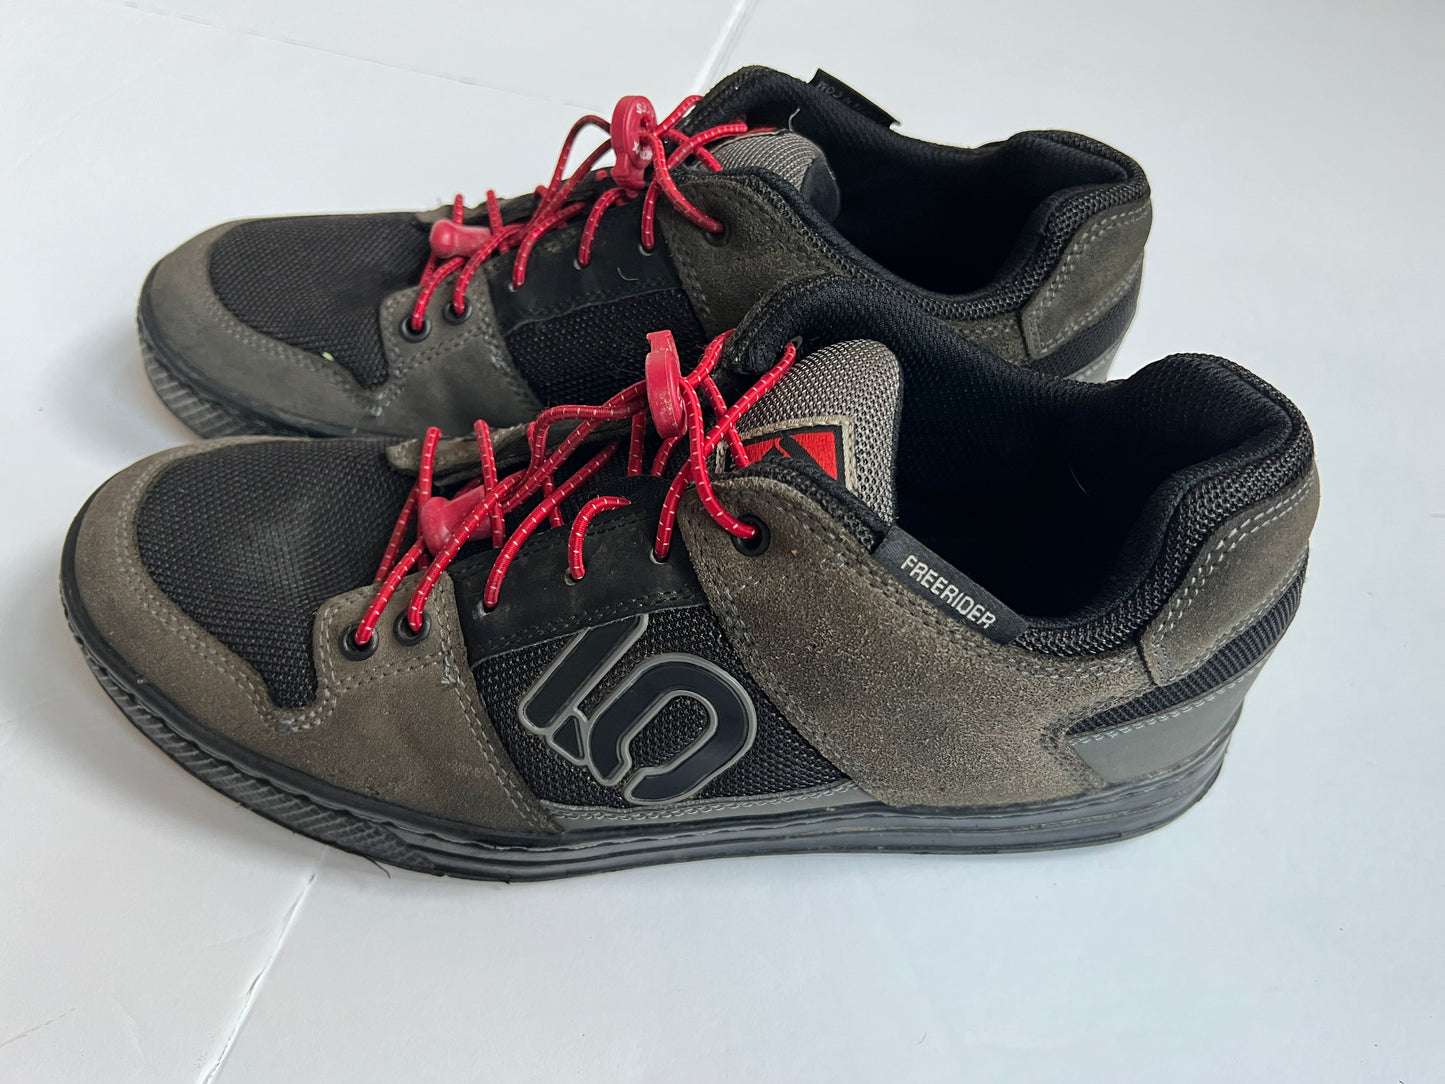 Mens Shoe Size 10.5 Five Ten Freerider Mountain Biking Shoes by Adidas